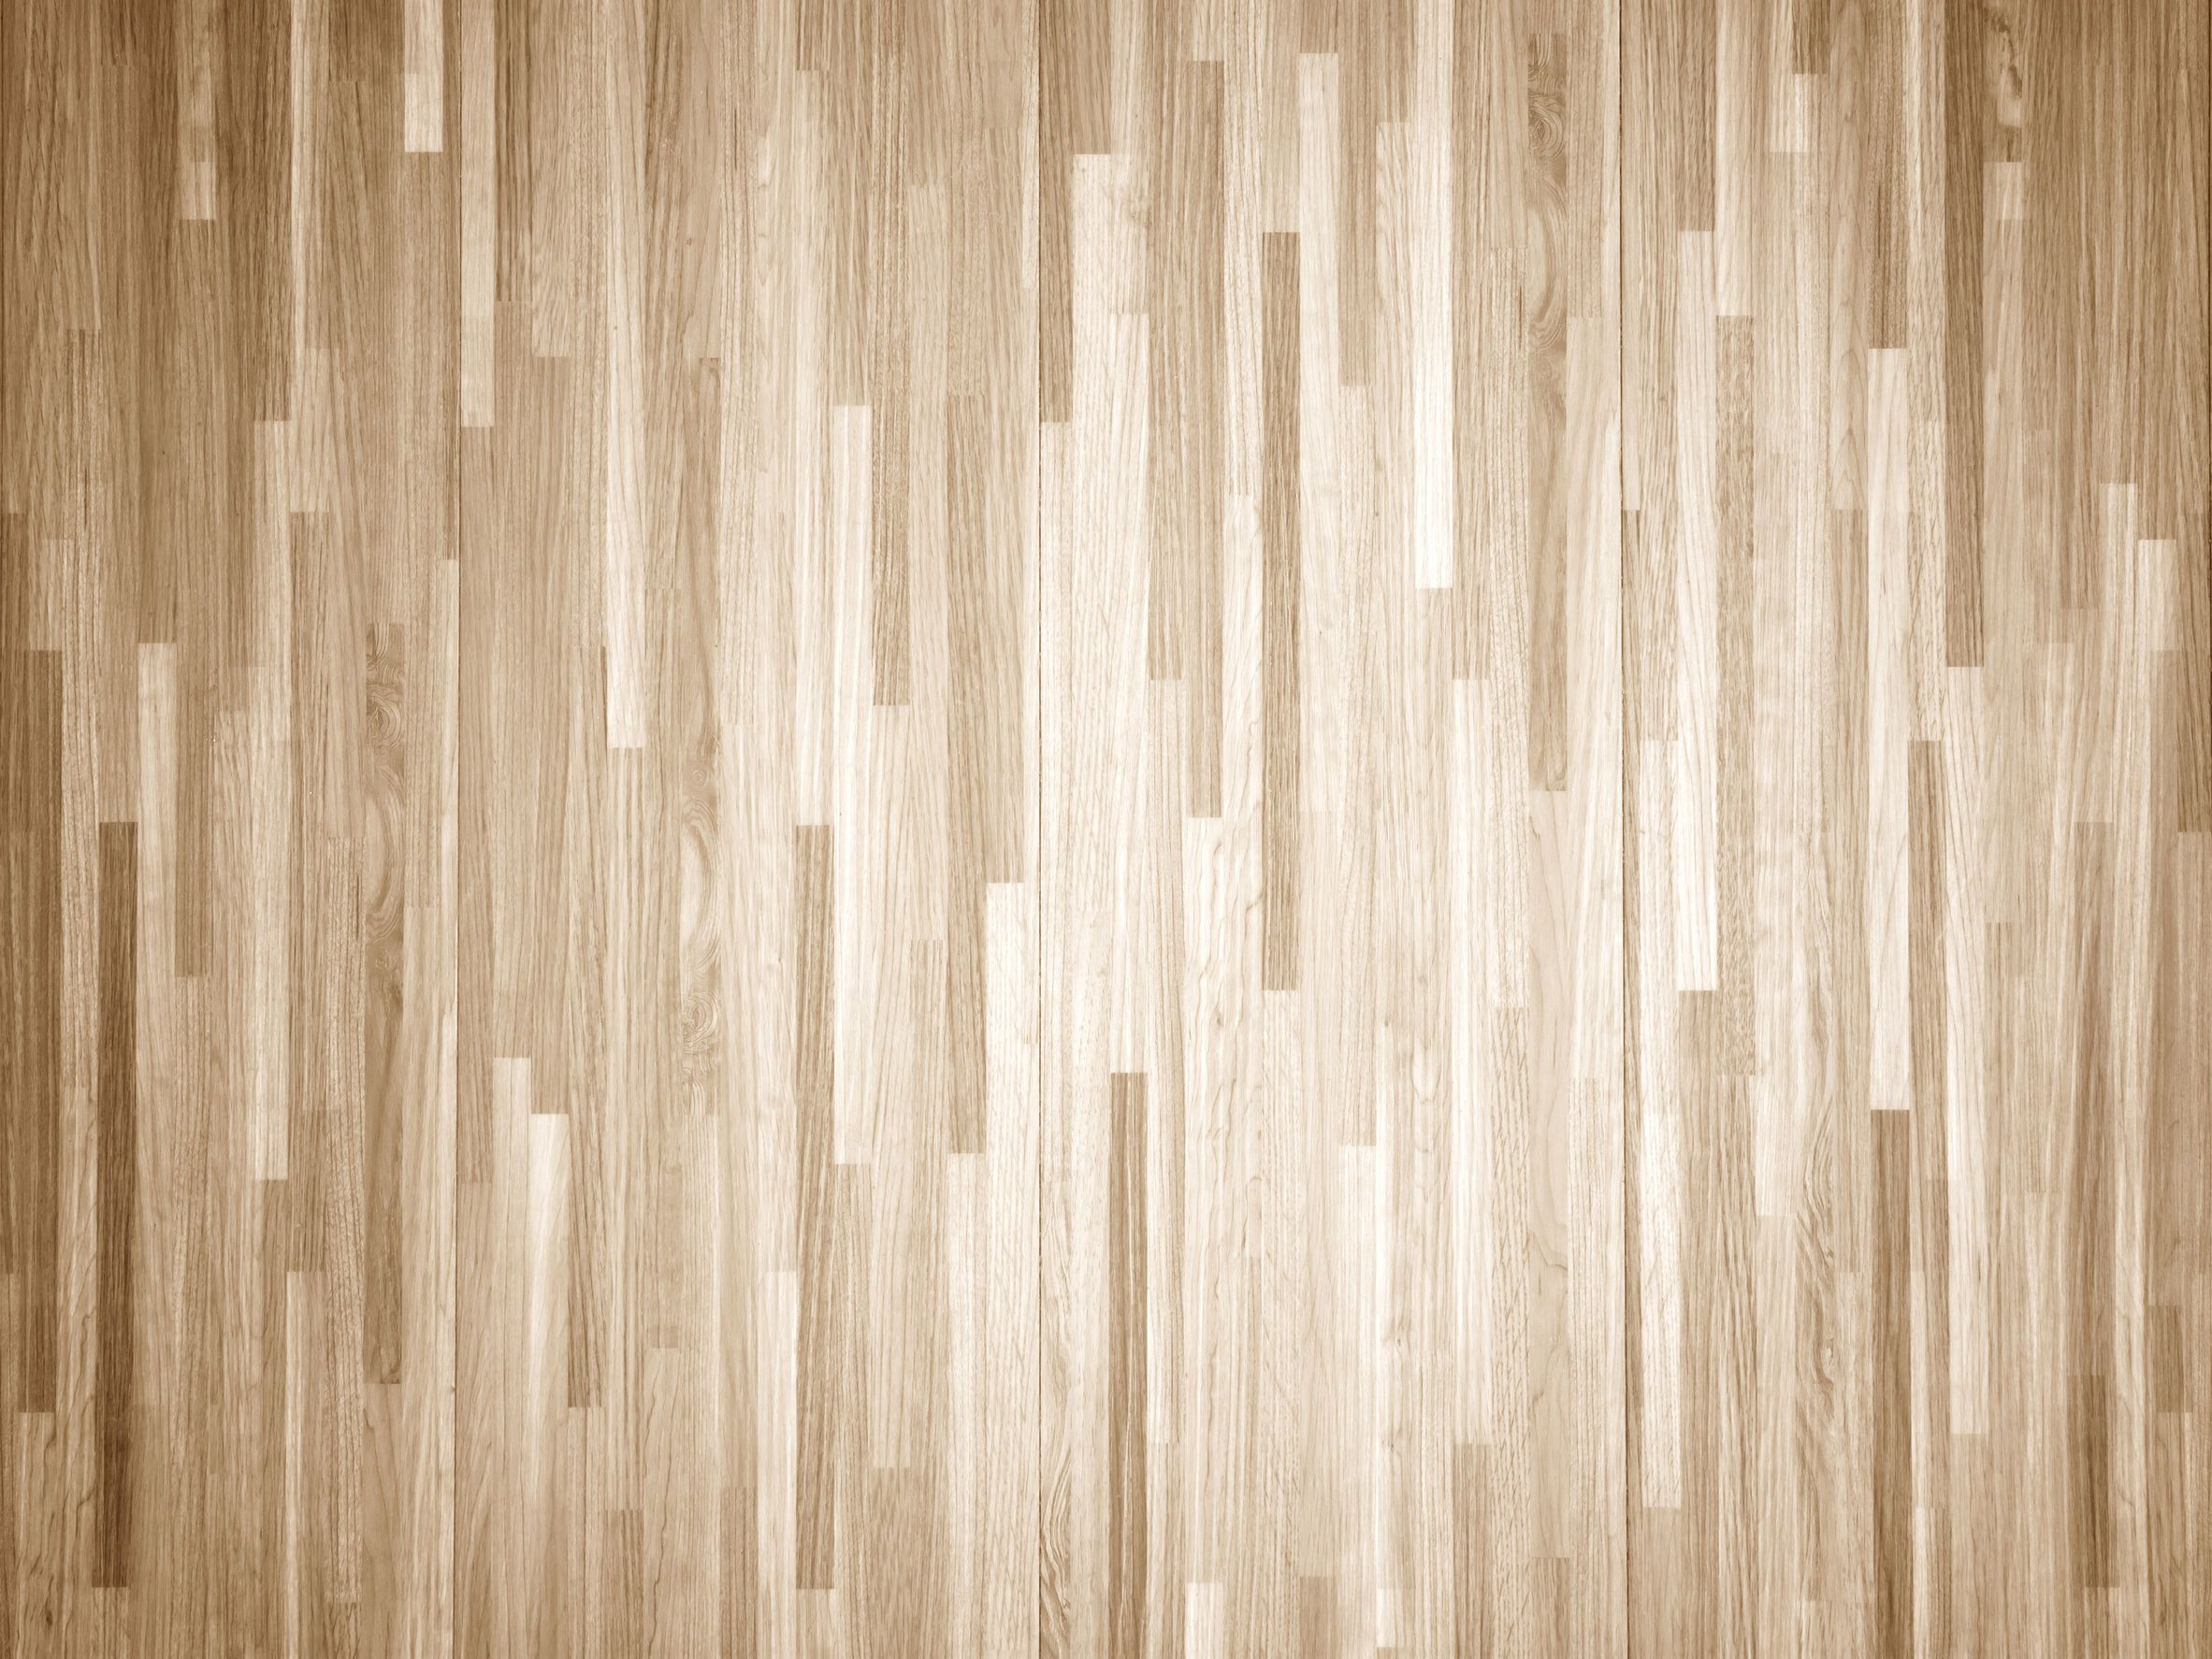 benefits of hardwood flooring vs laminate of how to chemically strip wood floors woodfloordoctor com in you